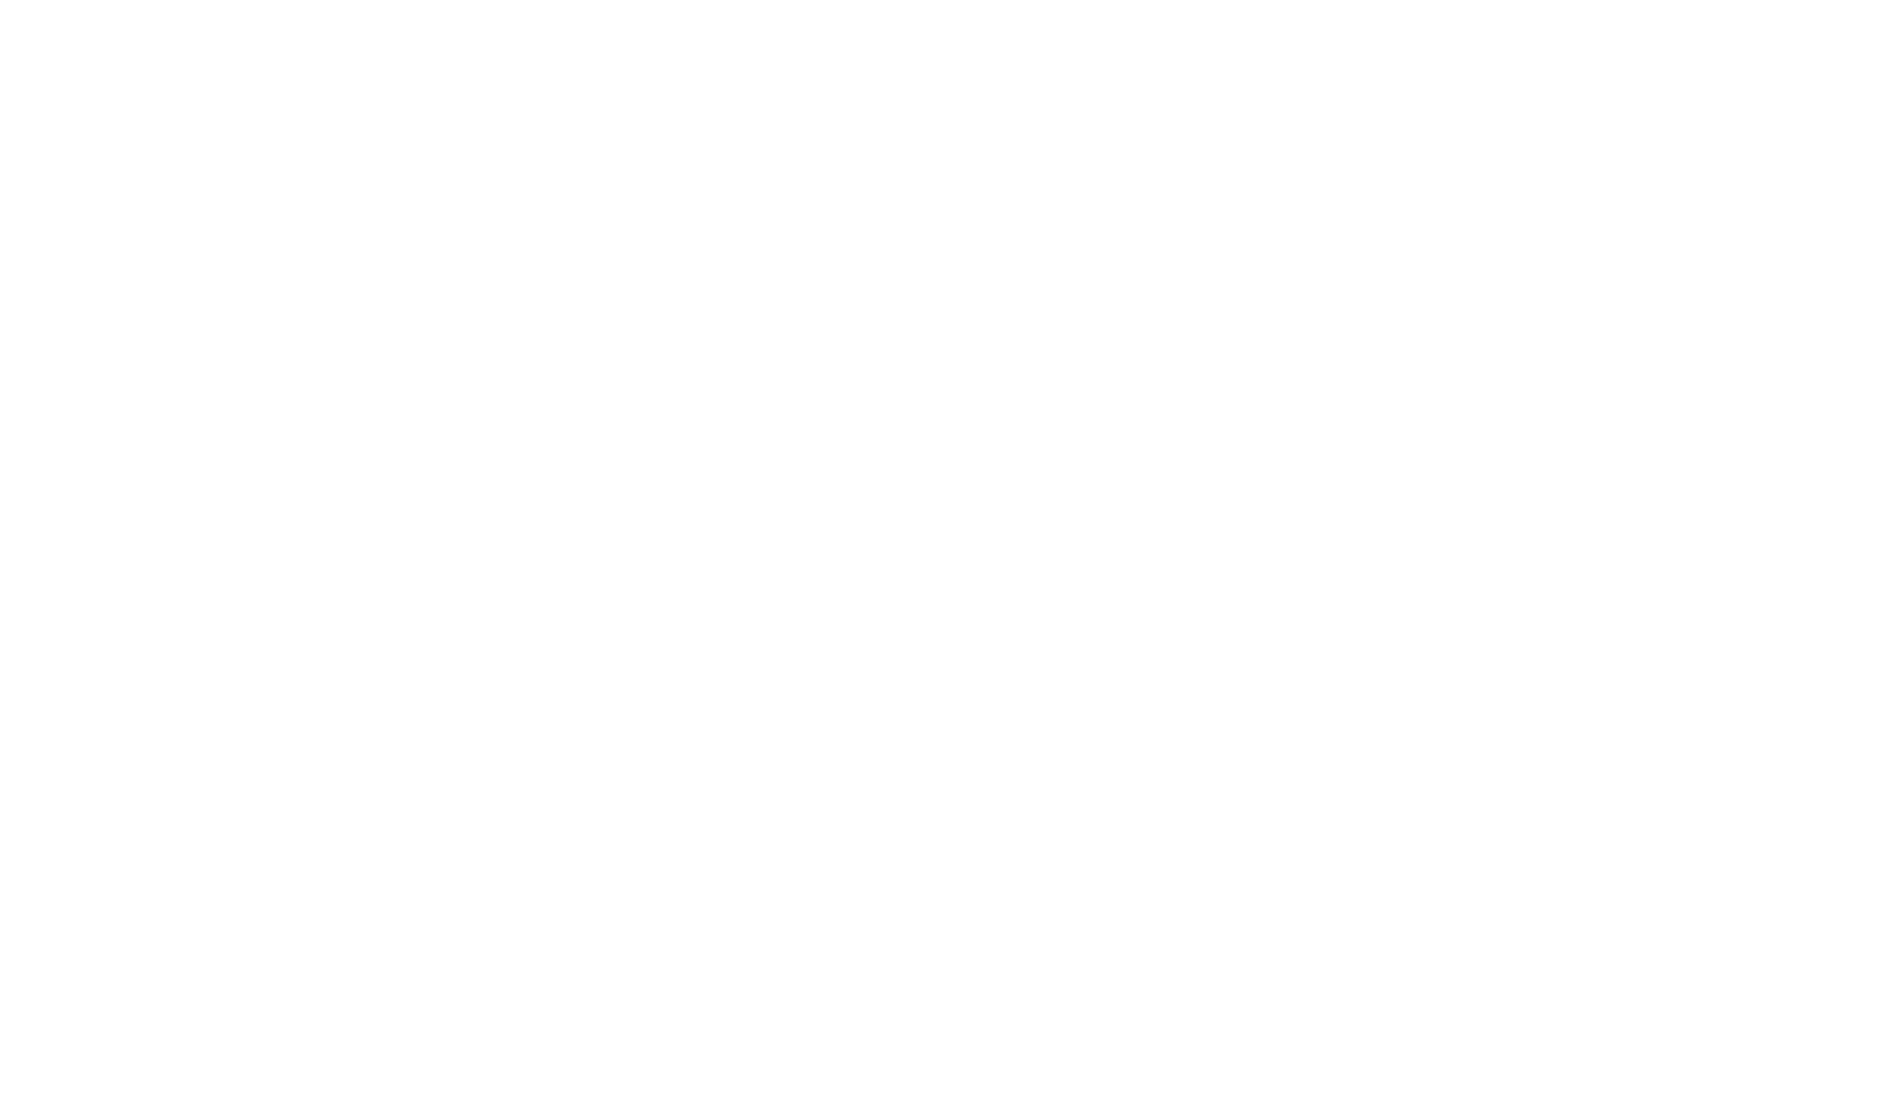 Les fabricants - logo client okko